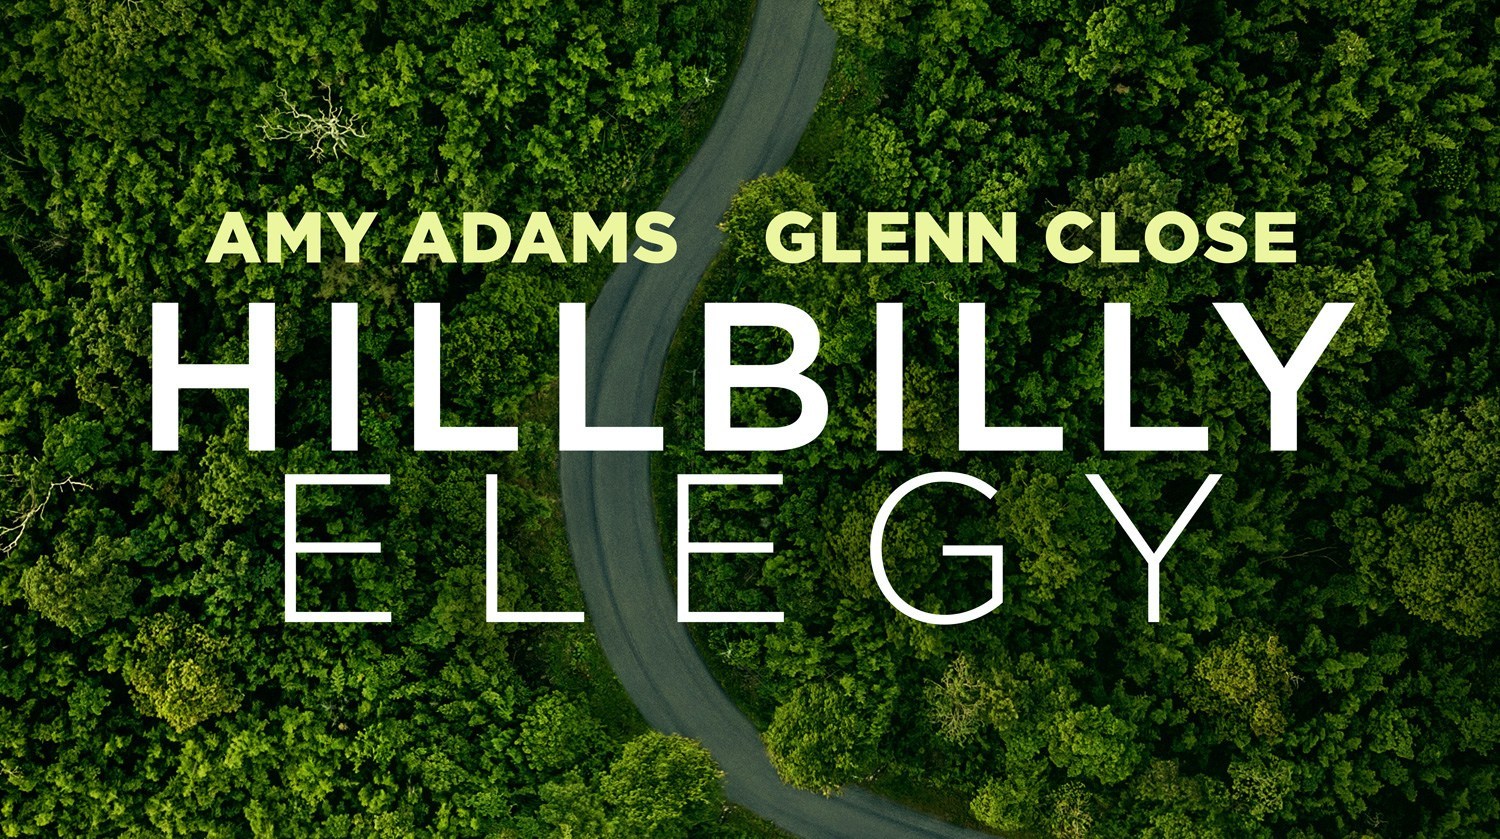 “Hillbilly Elegy” Arrives on Netflix, Riley Madison Fuller on “Dead Silent” Tonight, CURSED CHILD Postpones Performances, and more!